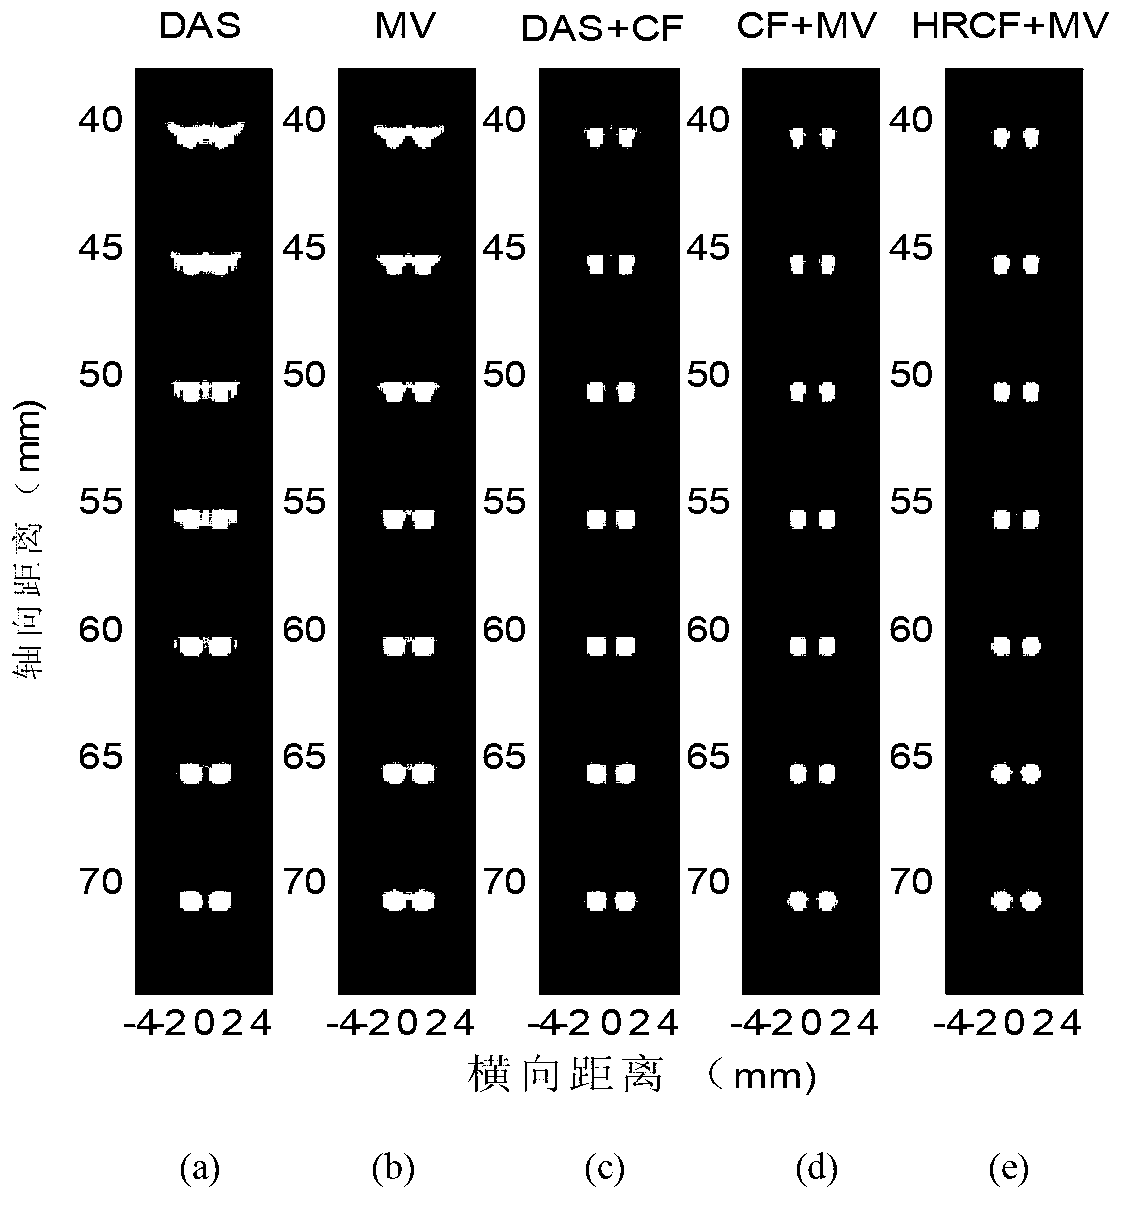 MV (Minimum variance) wave beam formation and MV-based CF (correlation factor) fusion method